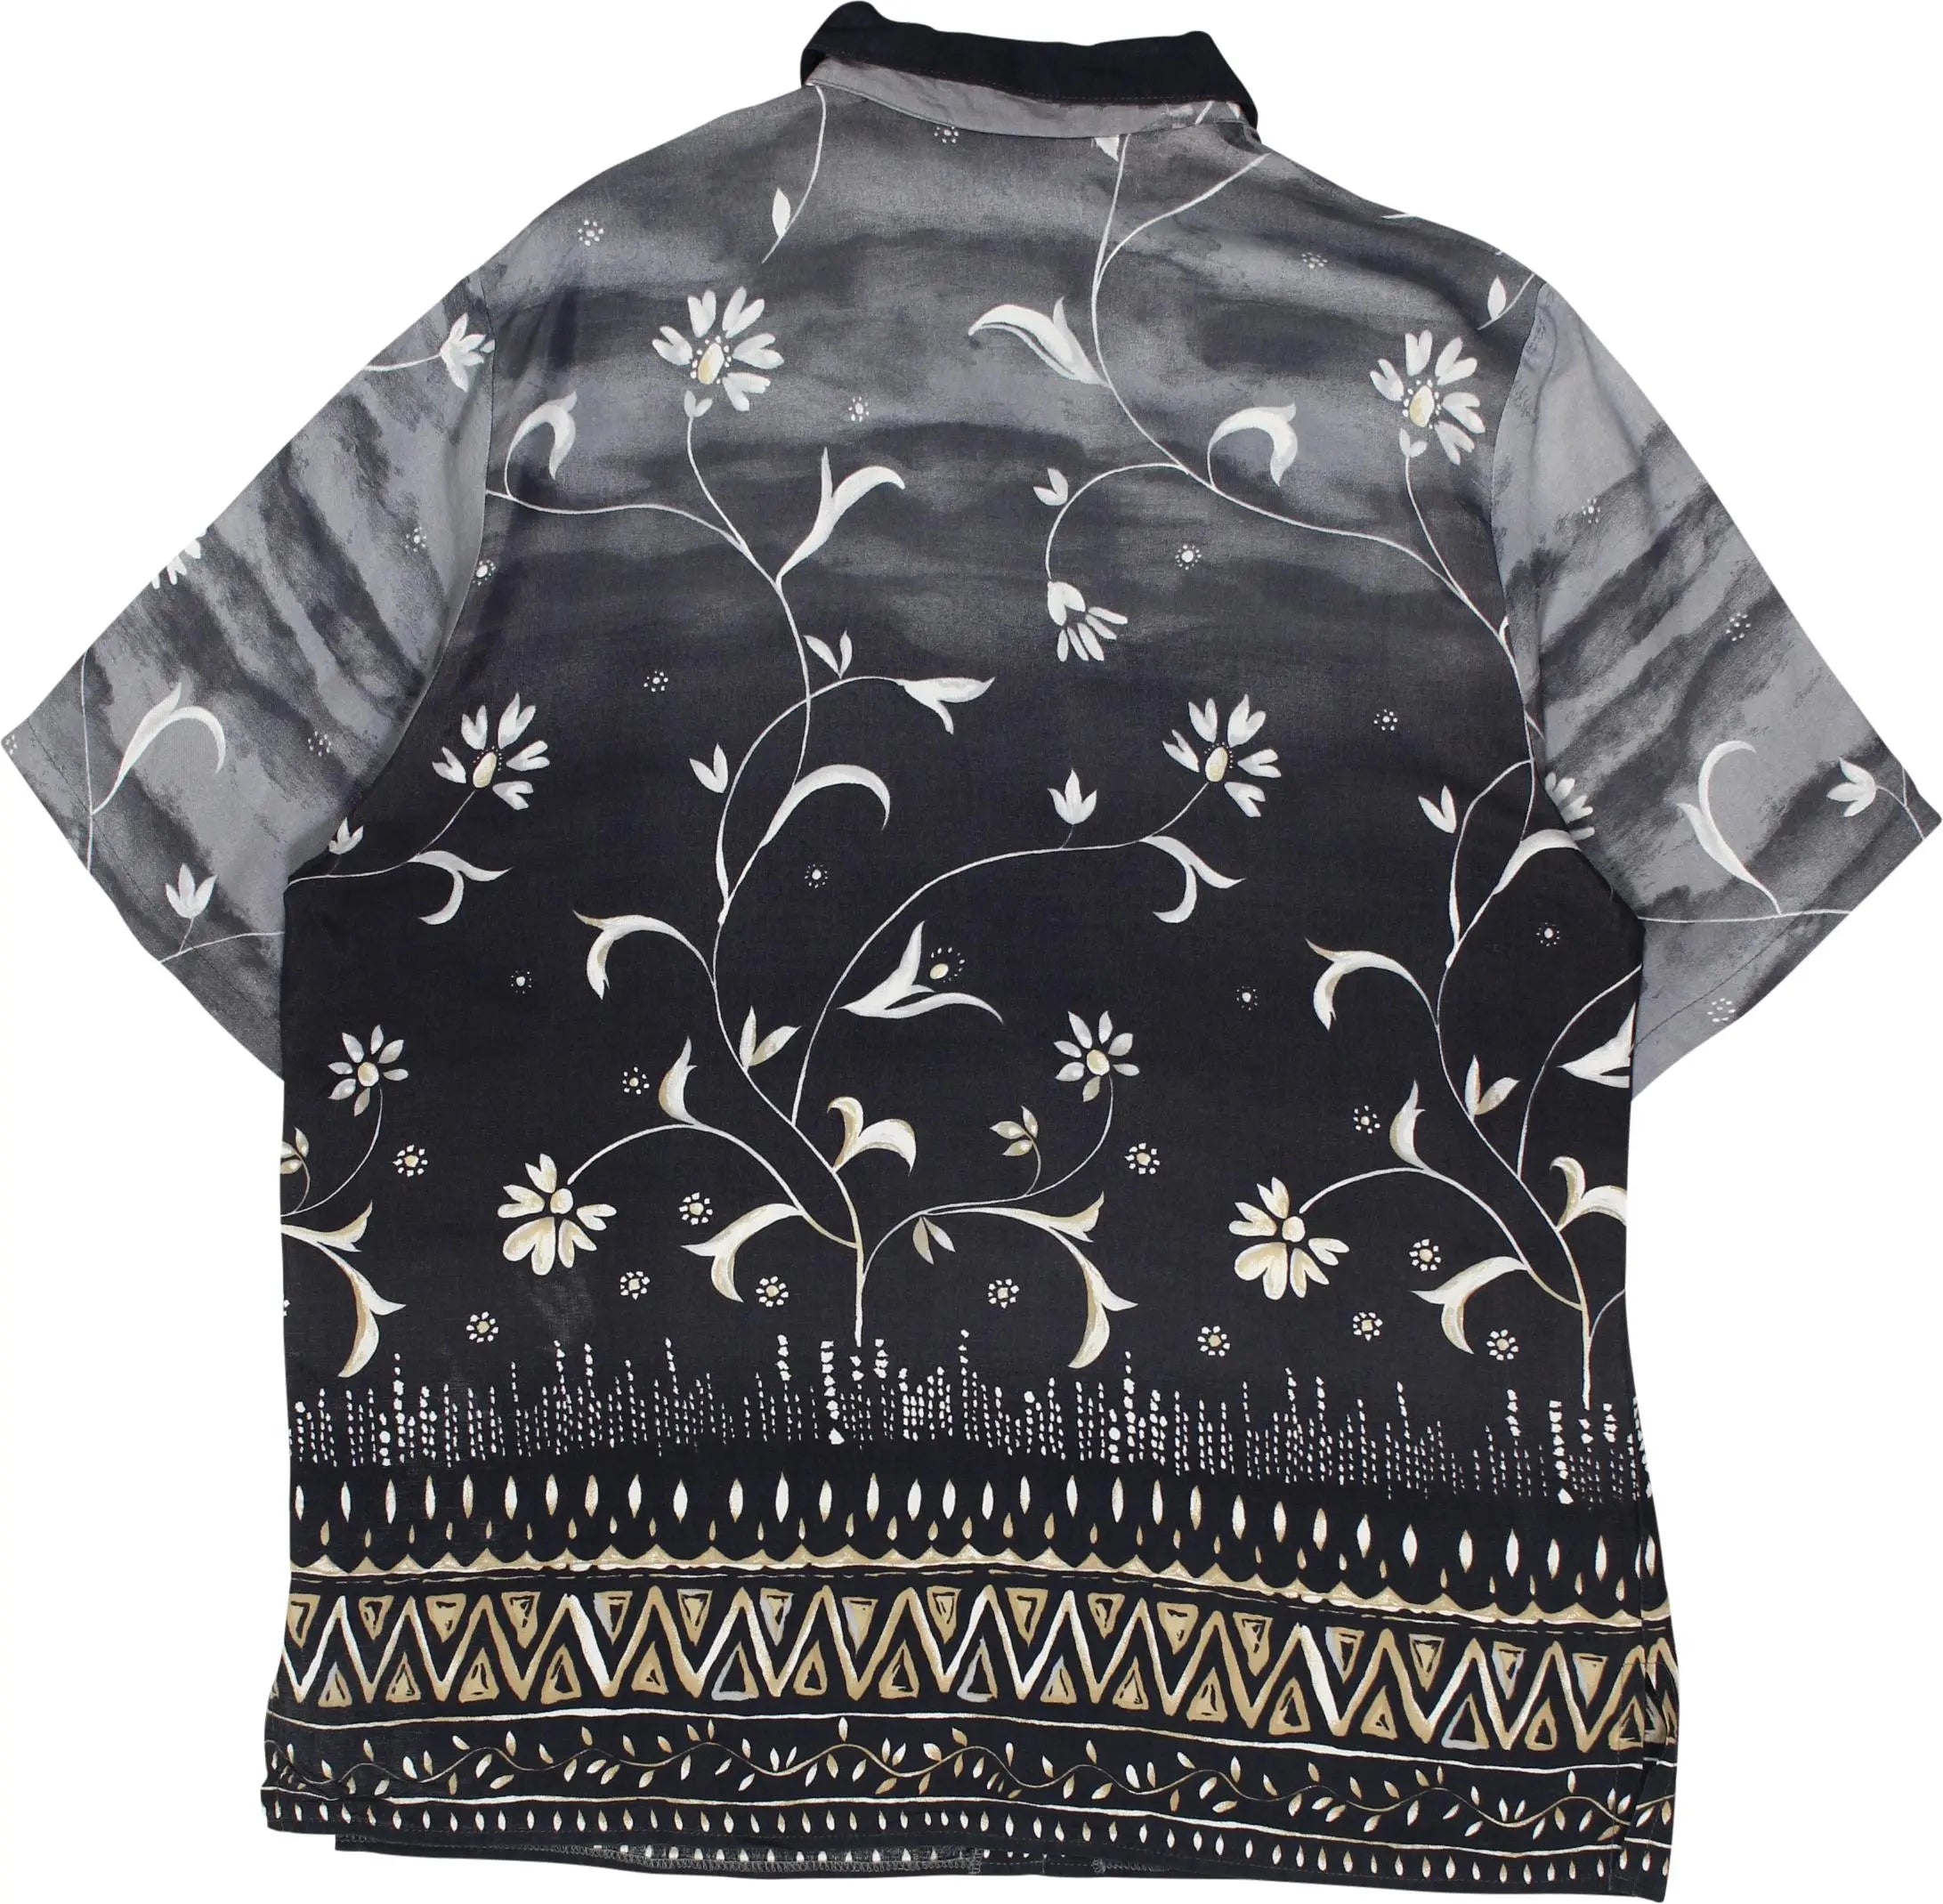 De Ville - 90s Shirt- ThriftTale.com - Vintage and second handclothing